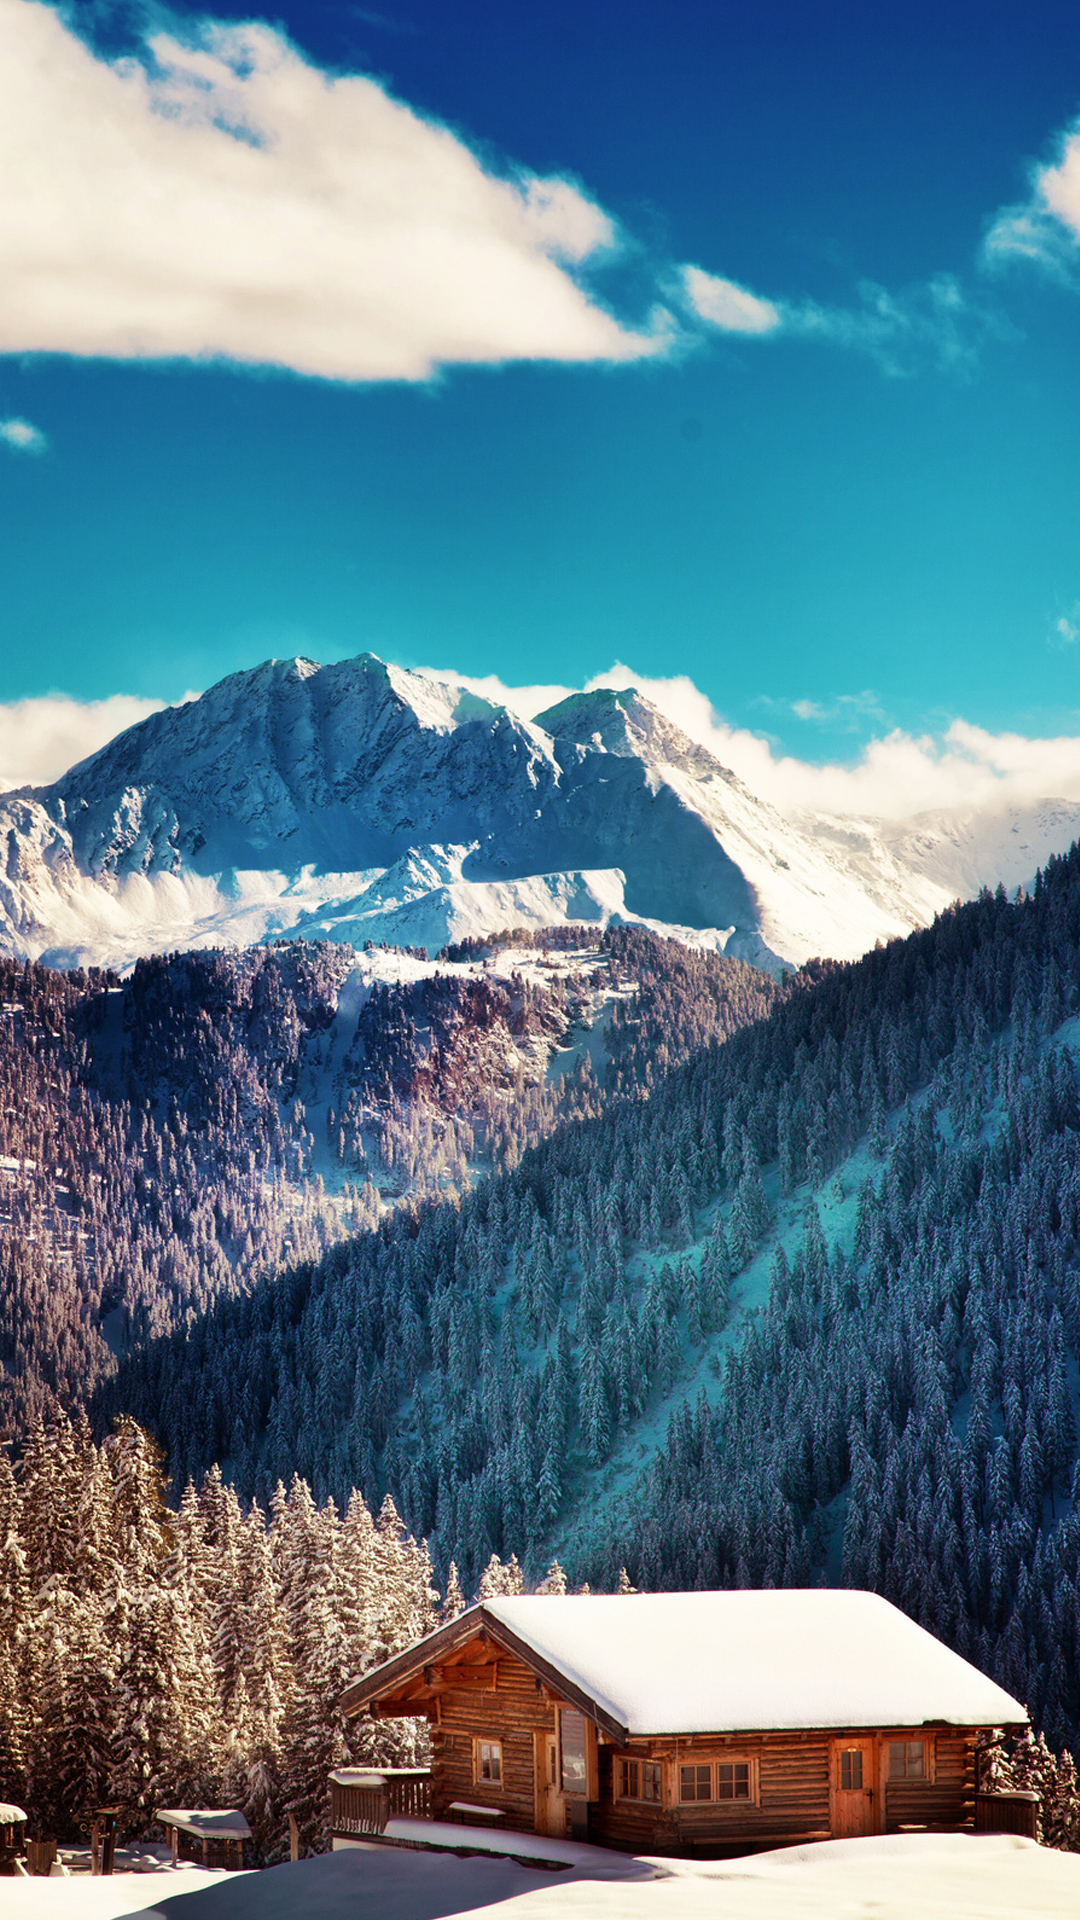 Mountains-Chalet-Winter-Landscape-iPhone-6-Plus-HD-Wallpaper.